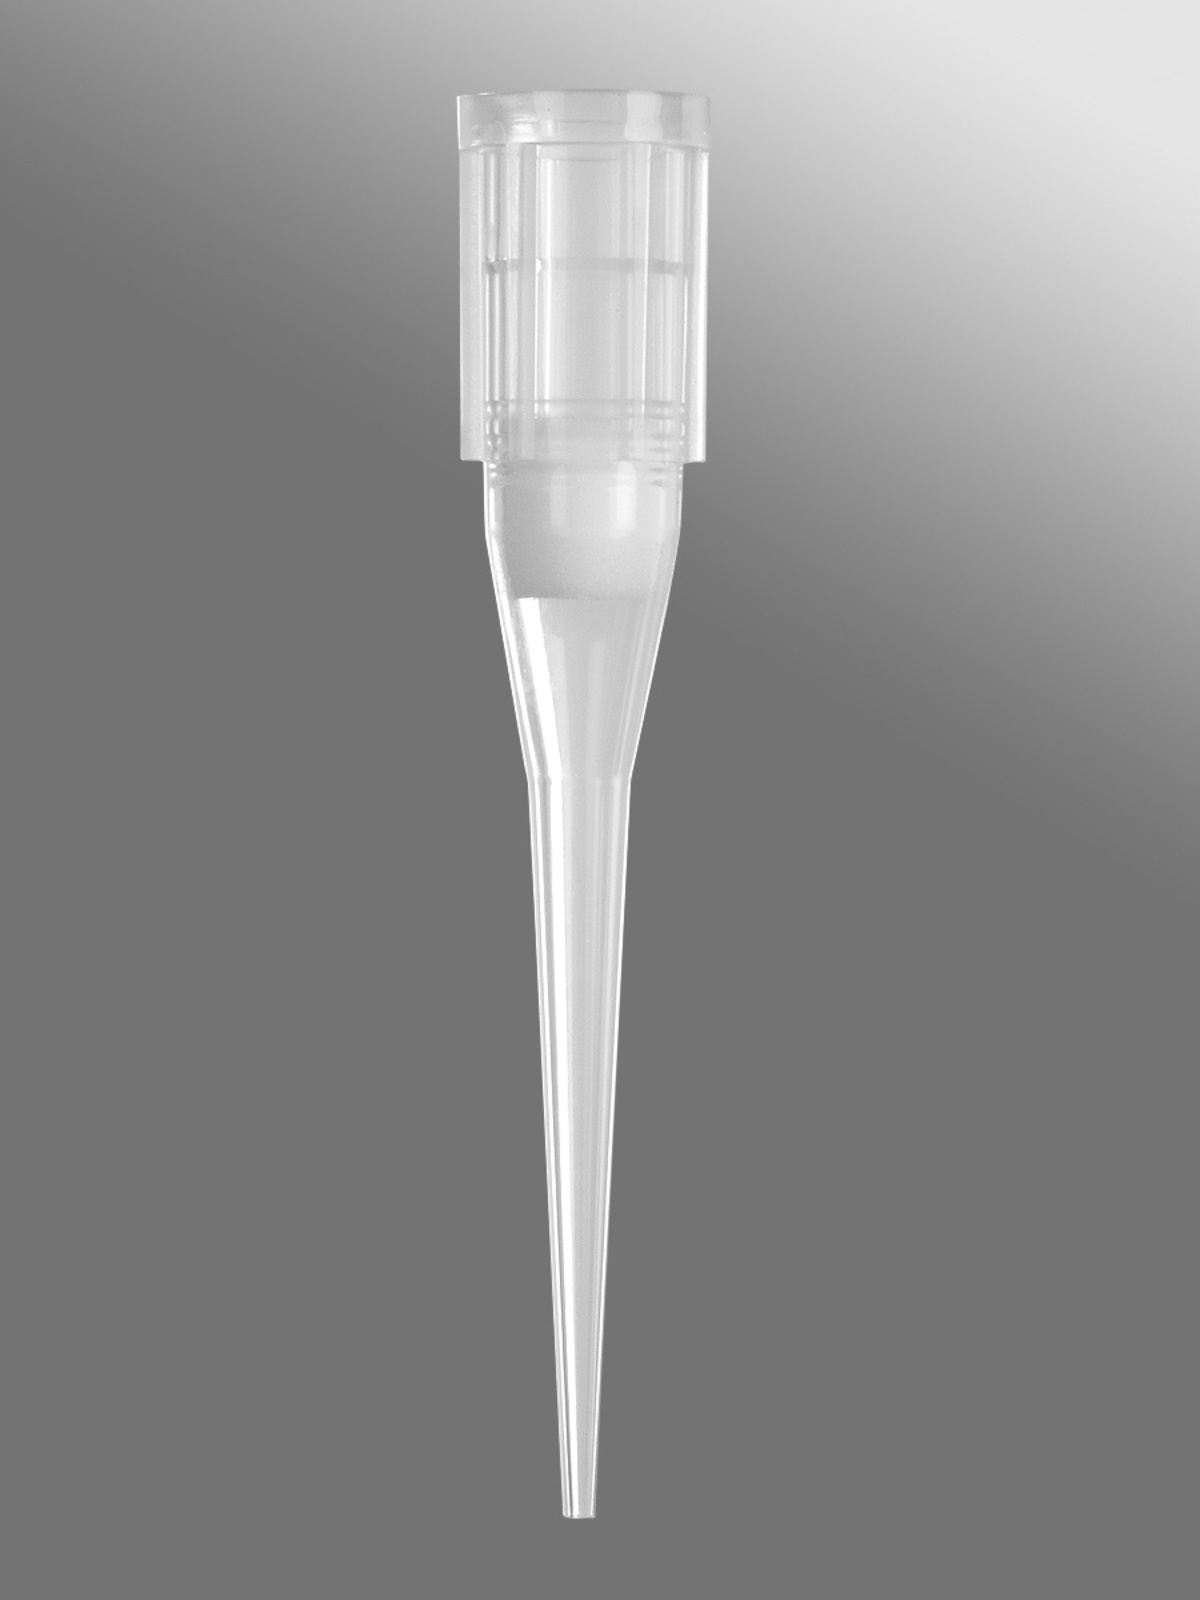 Axygen® 96孔吸头，20µL，透明，带滤芯，无菌，SLAS标准吸头盒